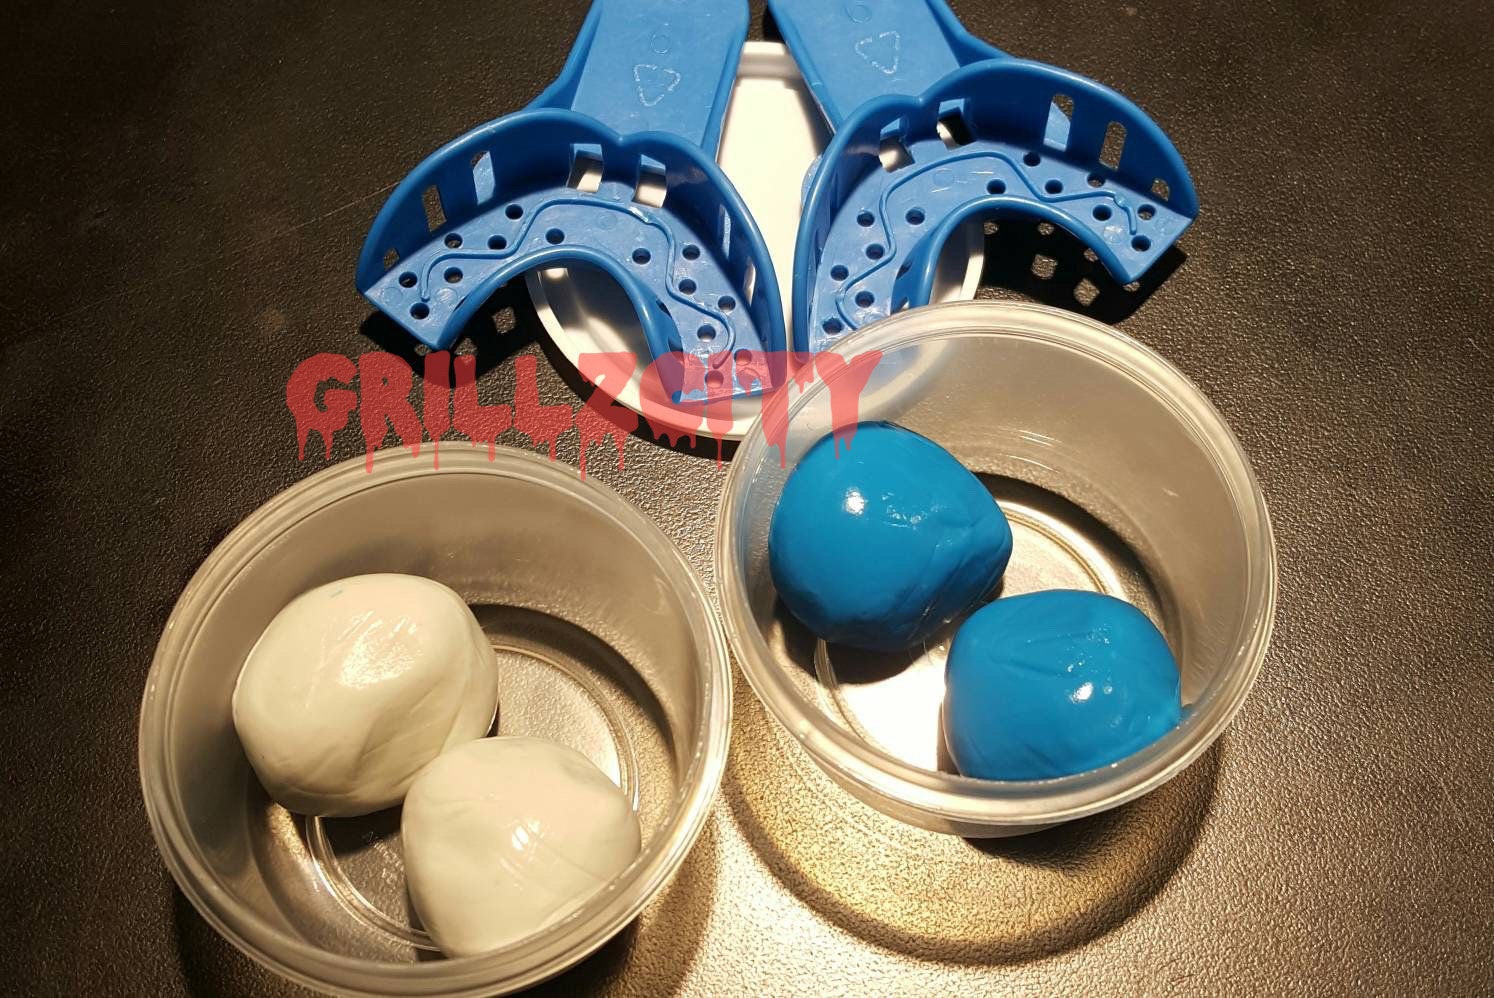 Custom Grillz Mold Kit – Teeth Dental Impression Kit w/Putty Full Kit  Medium (FREE SHIPPING)